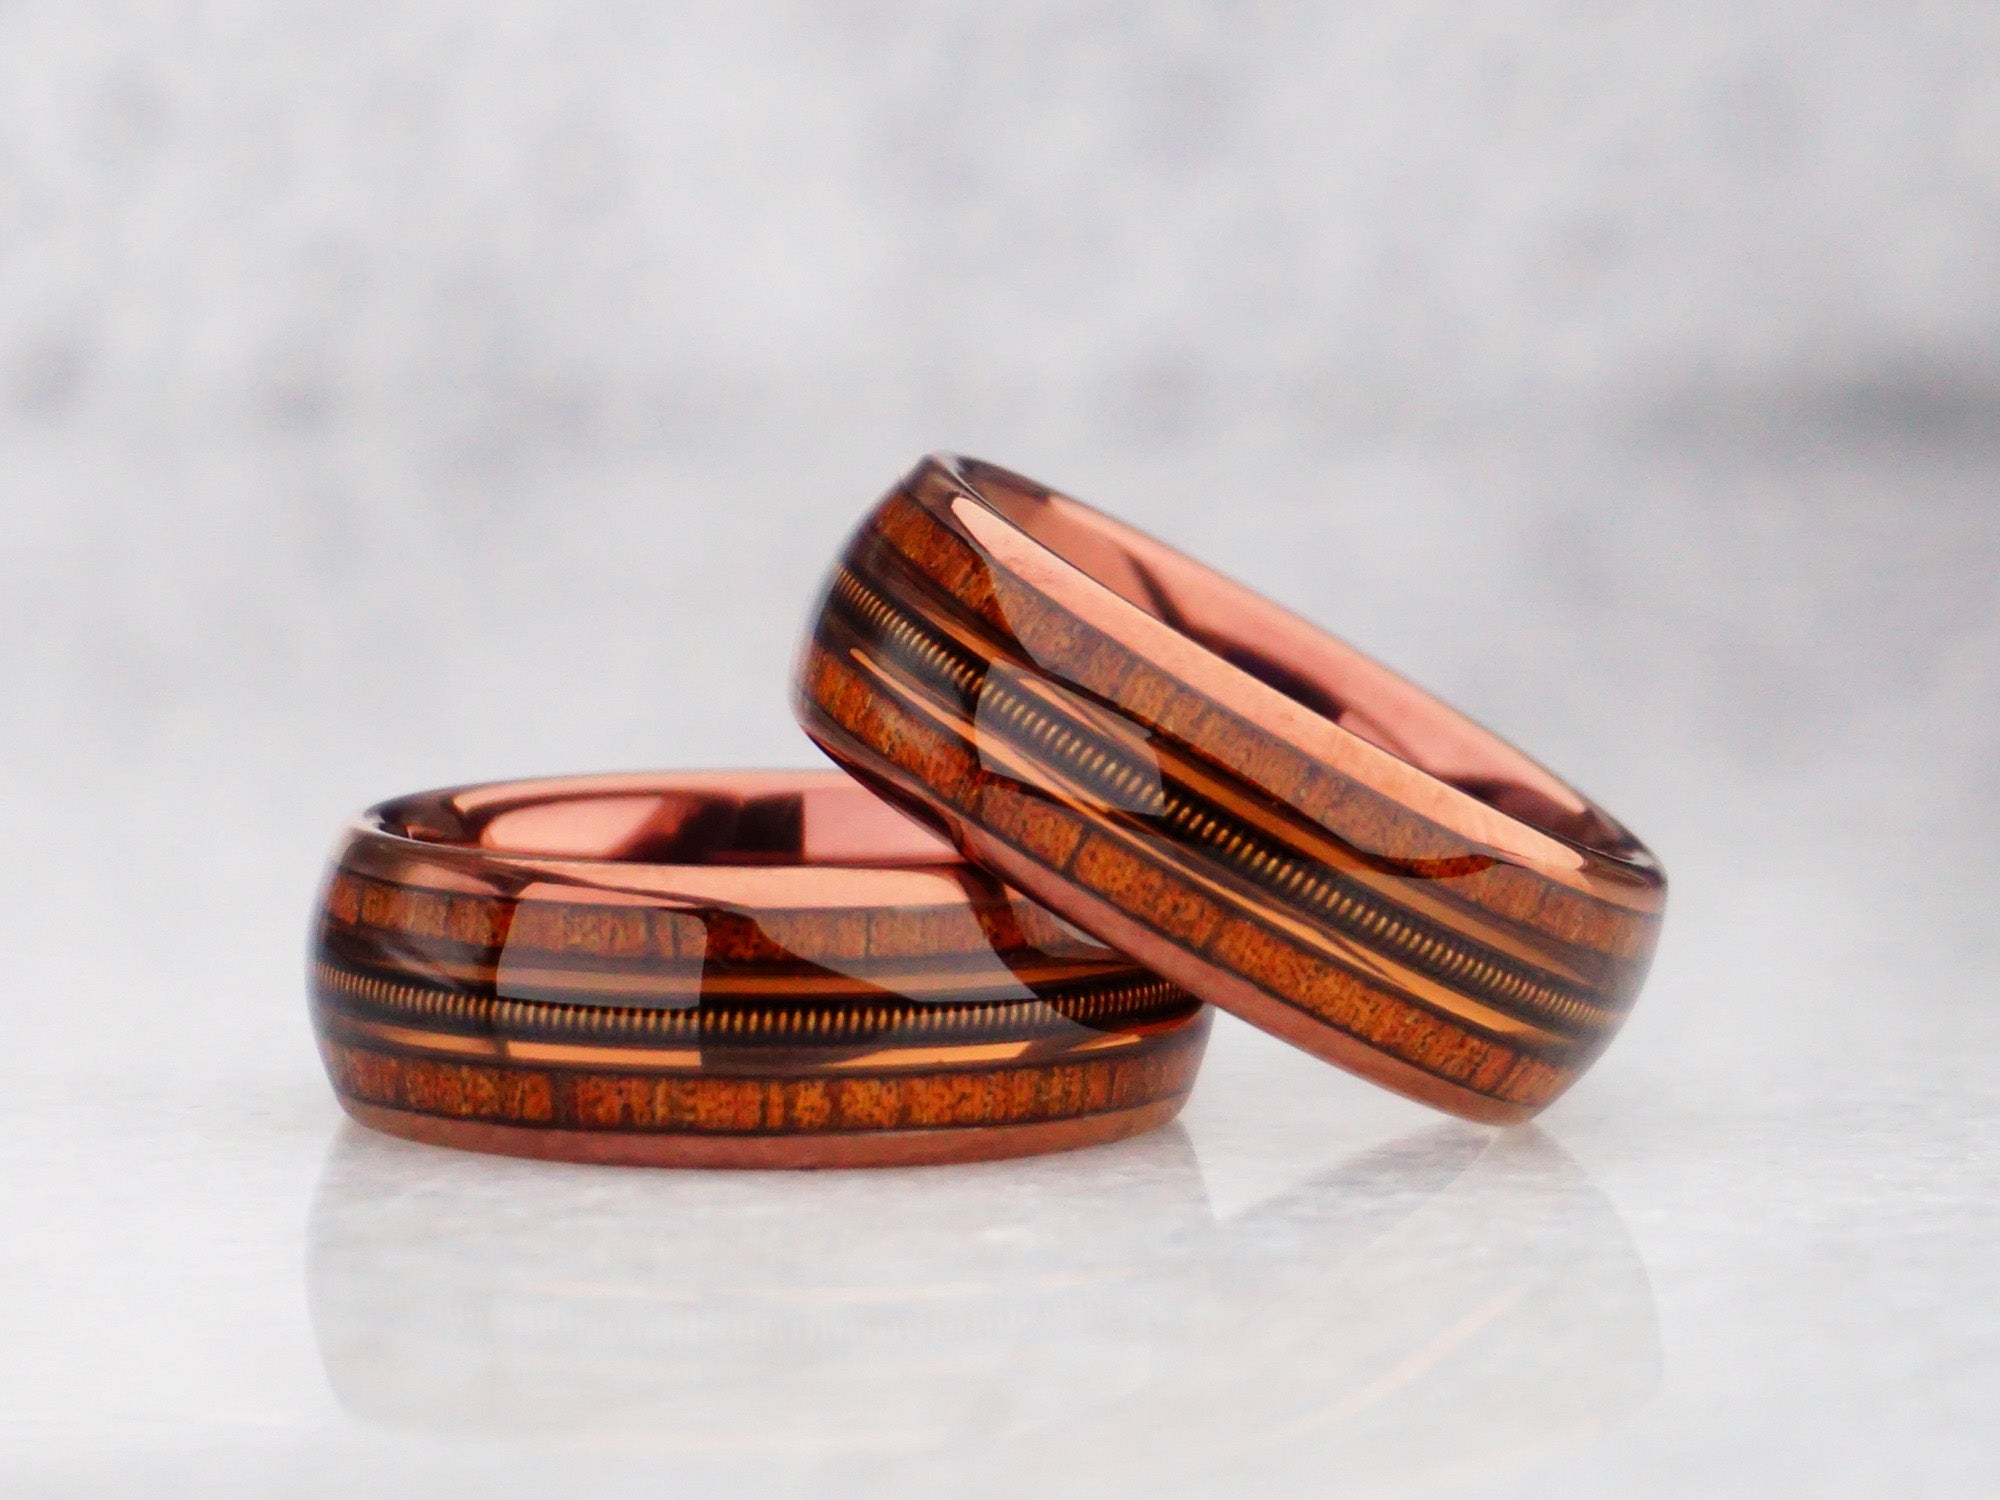 8mm brown koa wood guitar string, polished brown tungsten with double koa wood and guitar string inlay, modern mens wedding ring